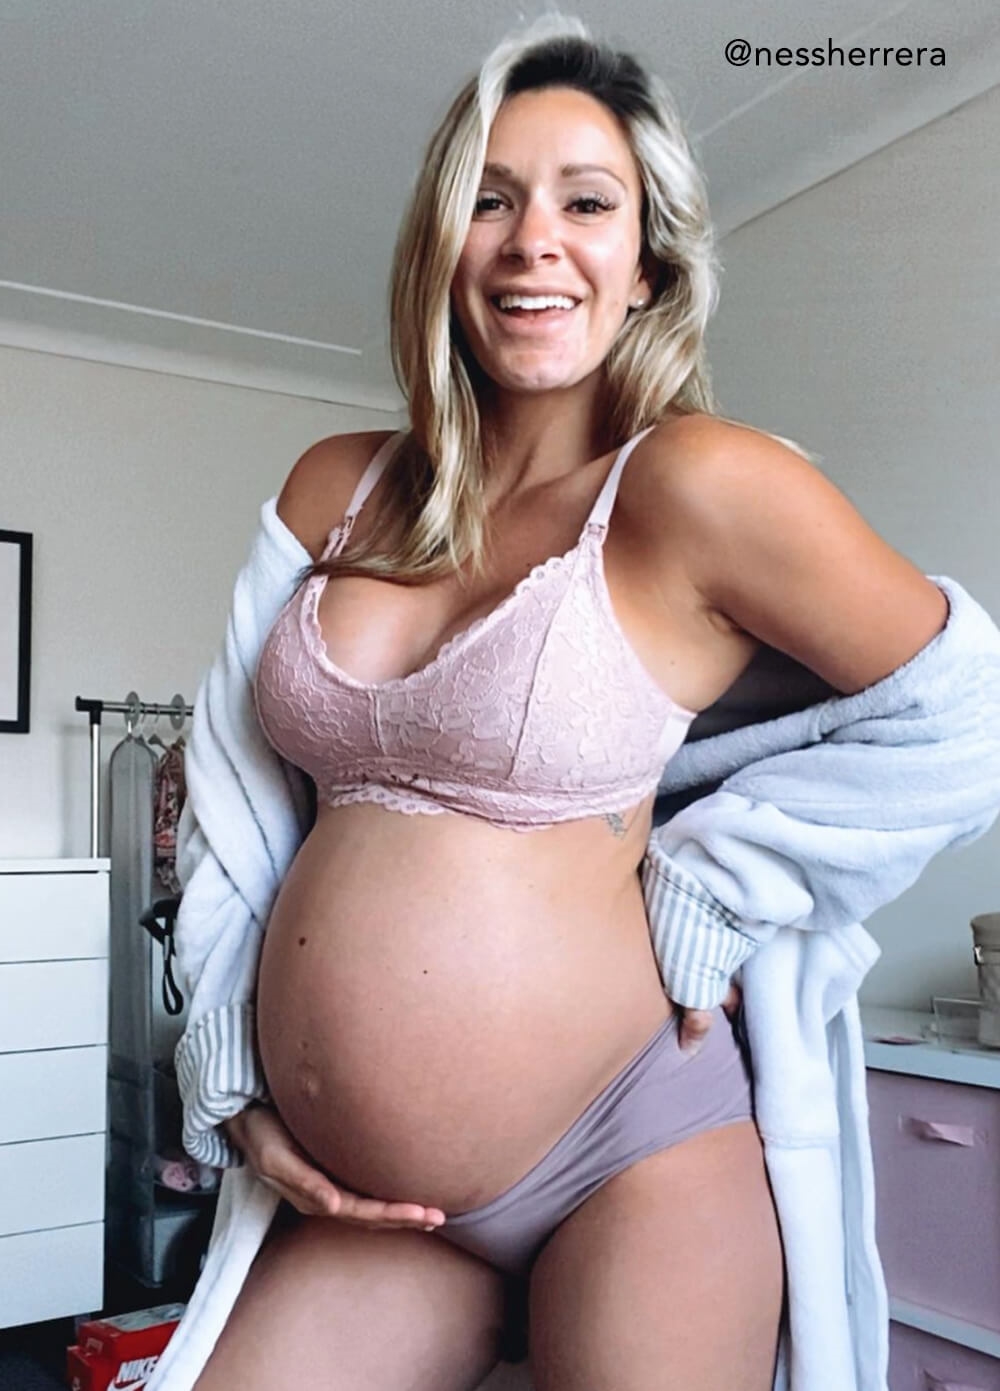 Women Under the Bump Maternity Underwear Pregnancy Underpants